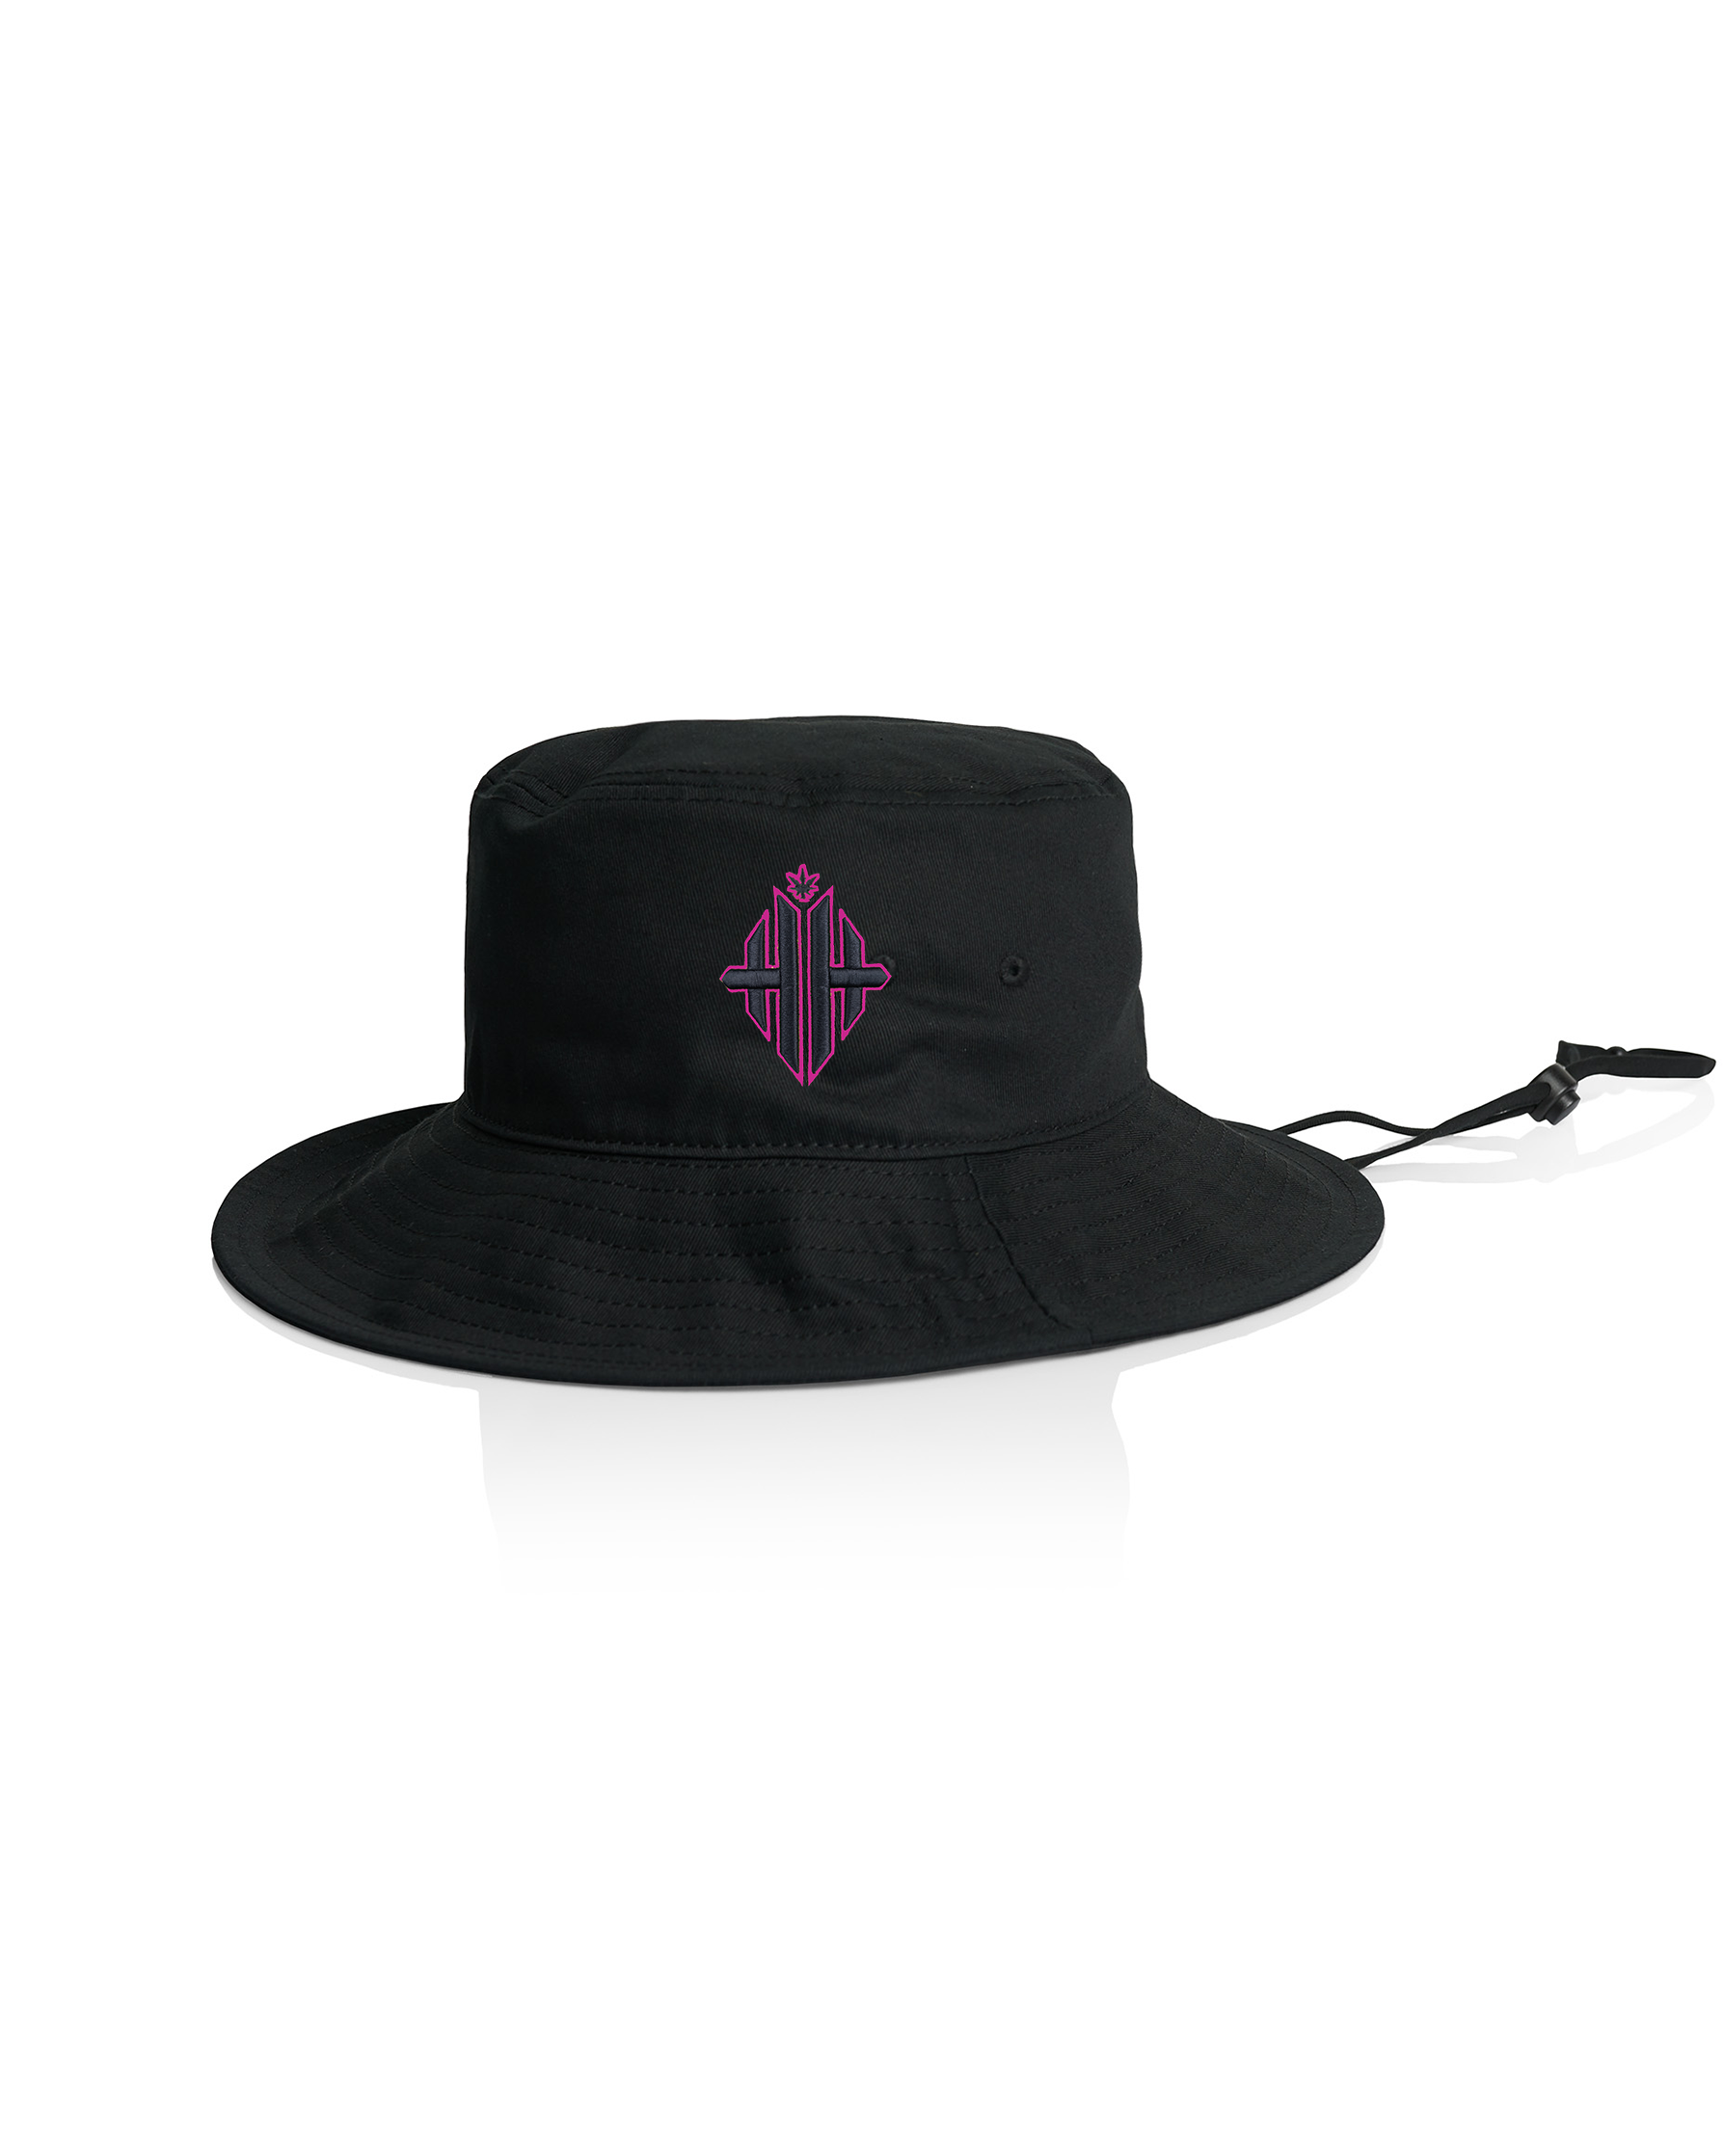 HH Monogram Bucket Hat - Black/Pink